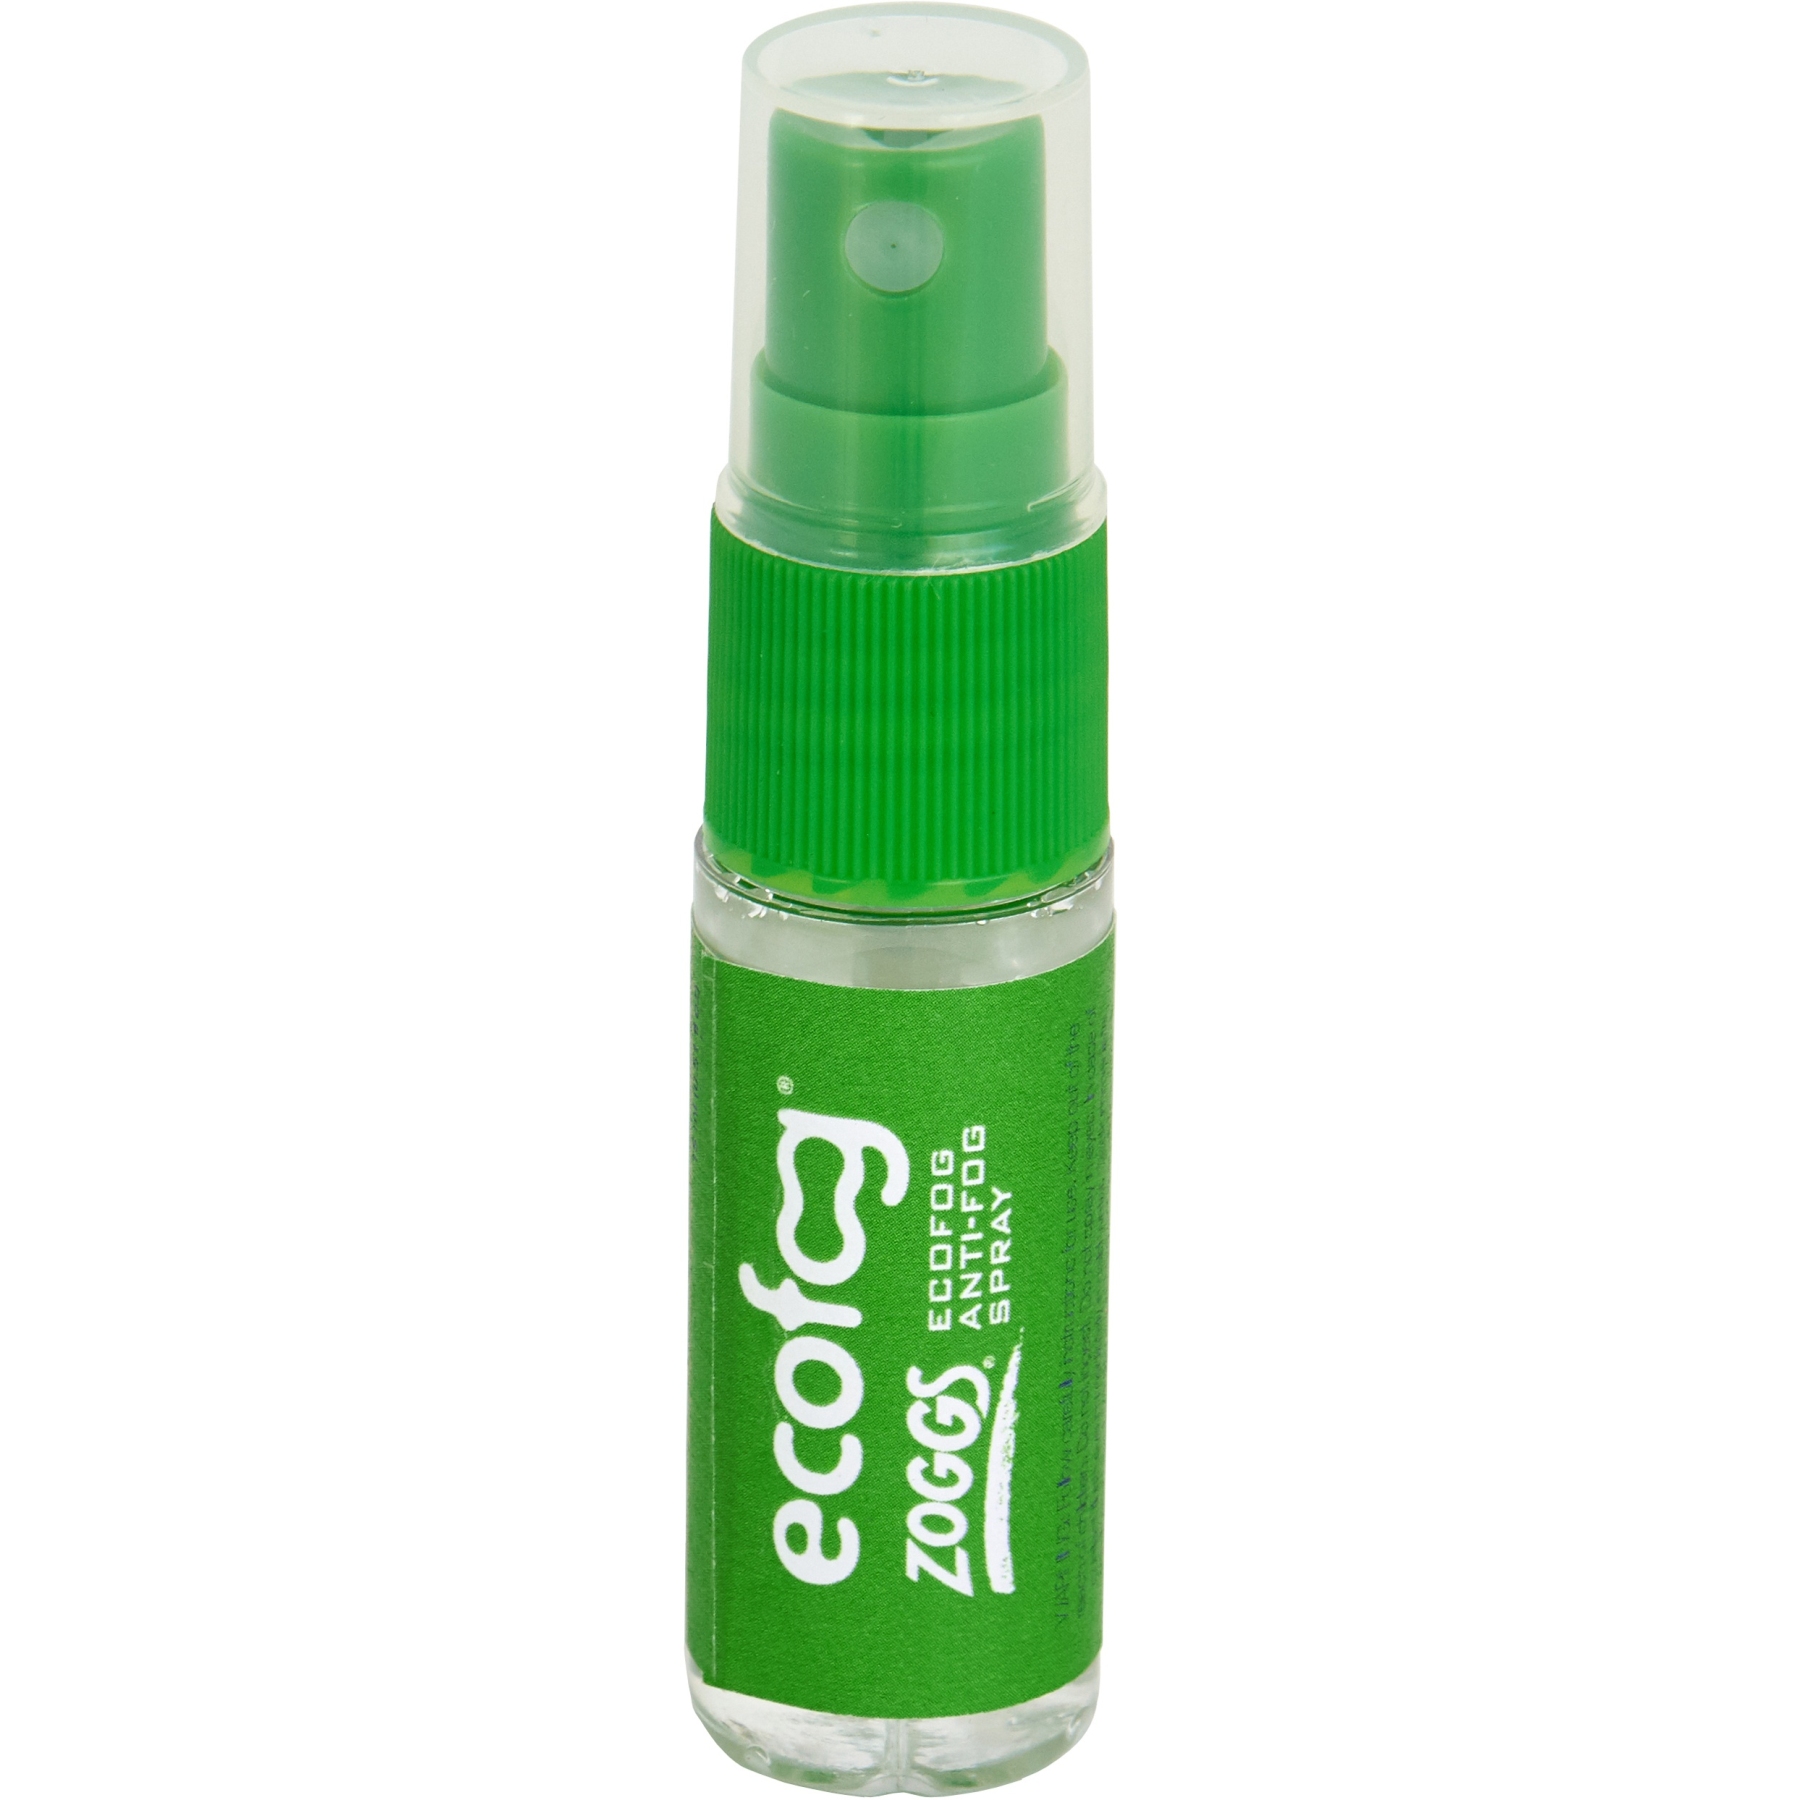 Picture of Zoggs ECOFOG Anti-fog spray